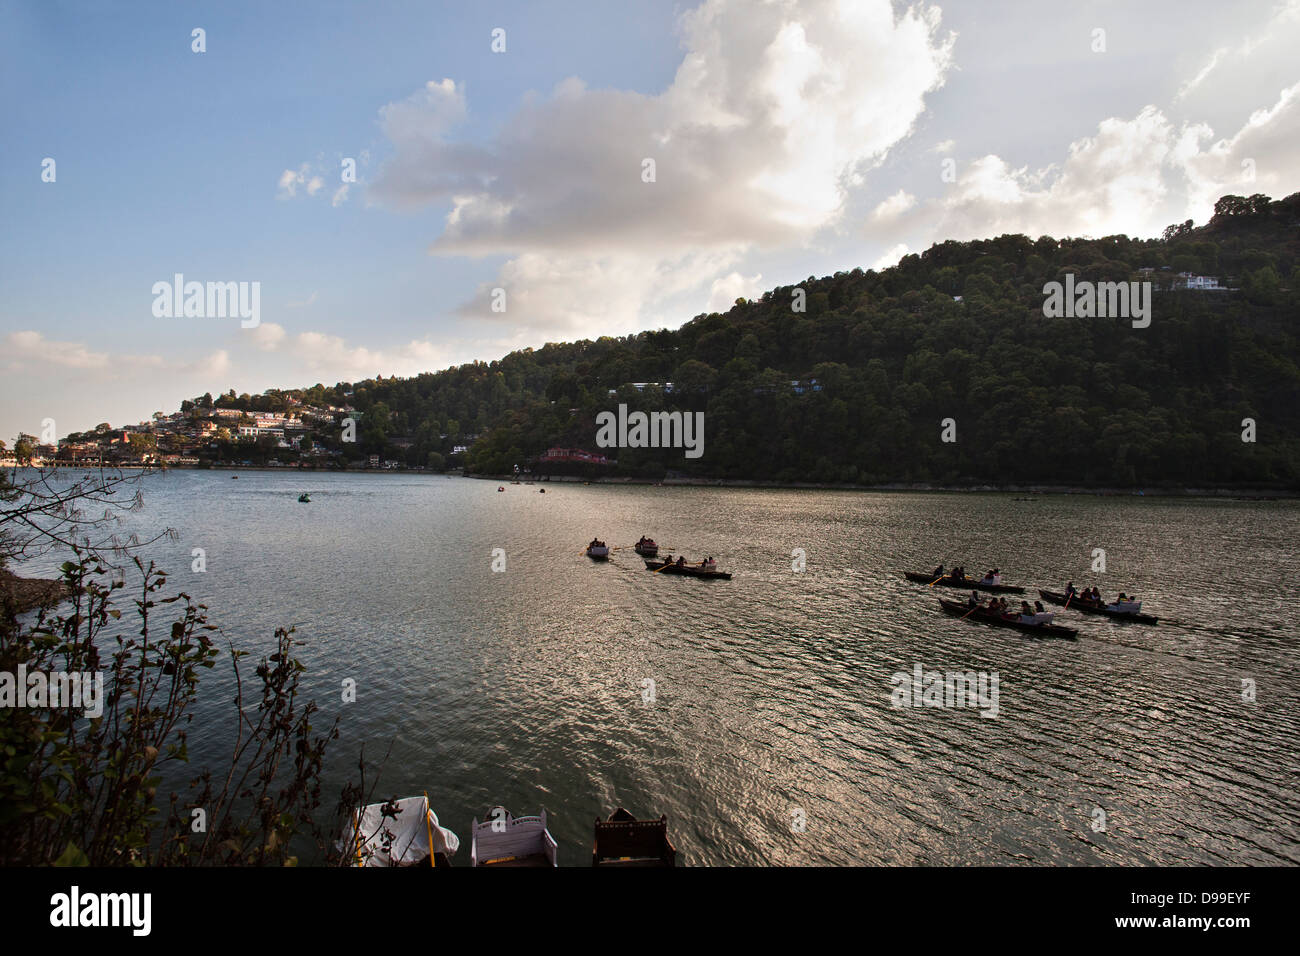 People rowing boats in a lake, Nainital, Uttarakhand, India, Asia Stock Photo